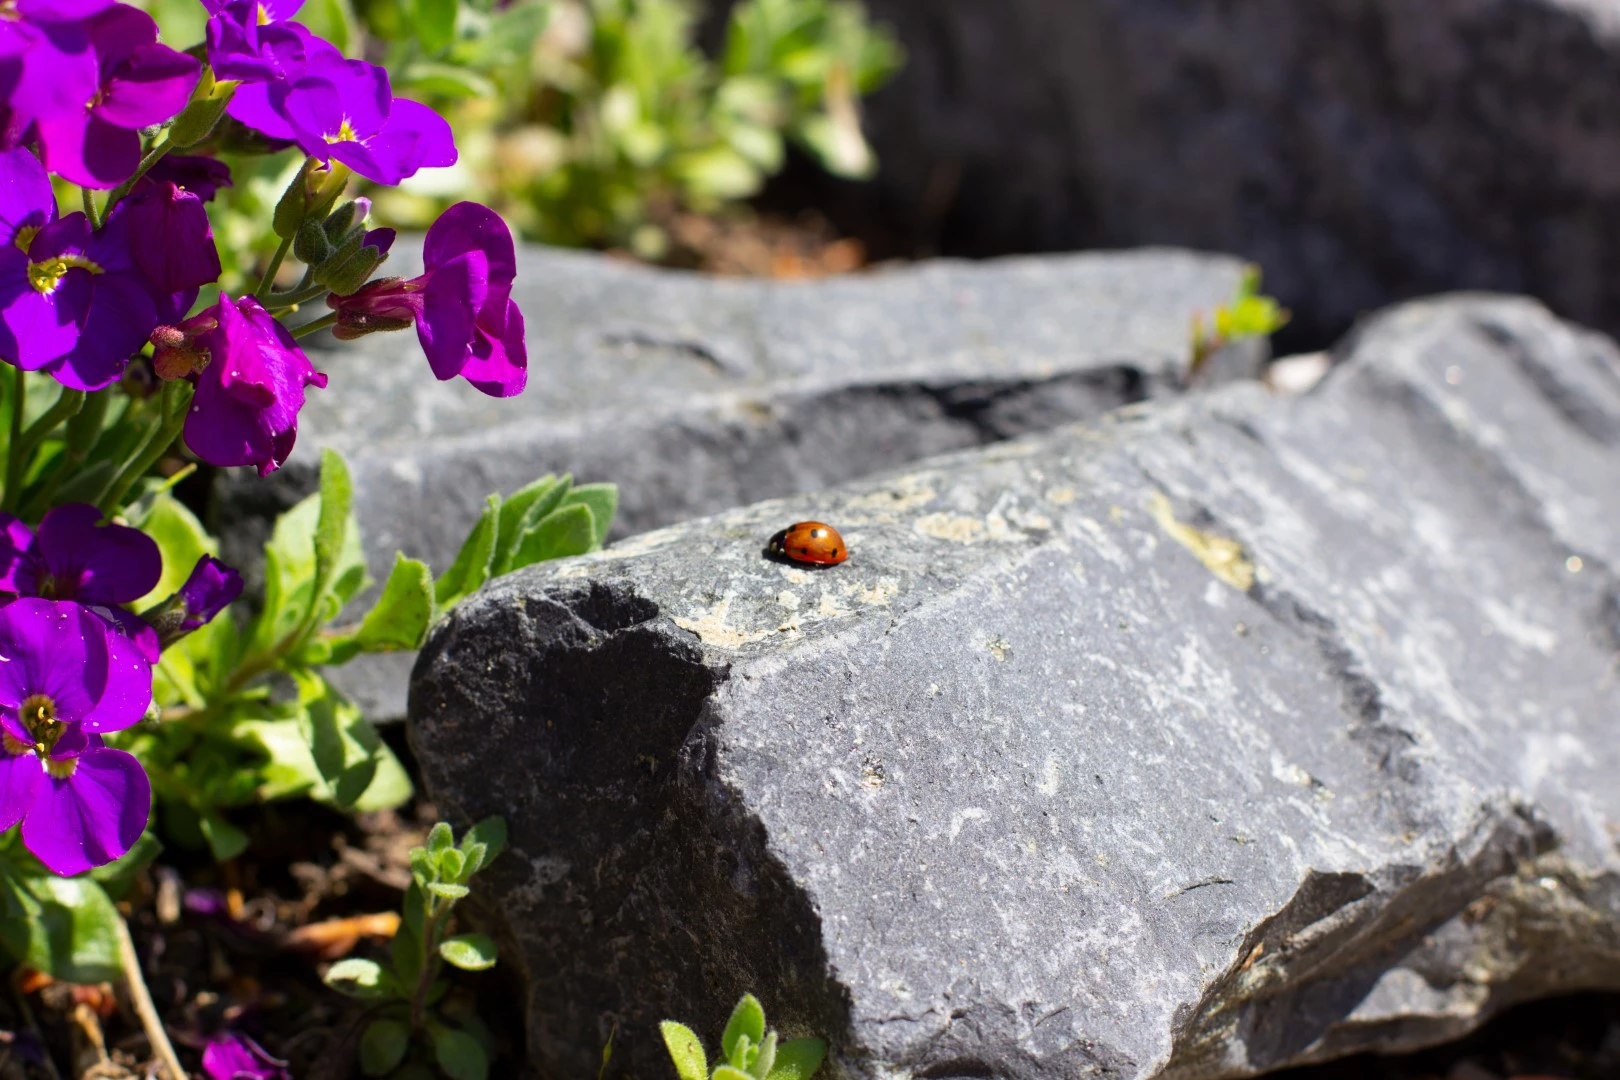 photography of a ladybug sitting on a stone